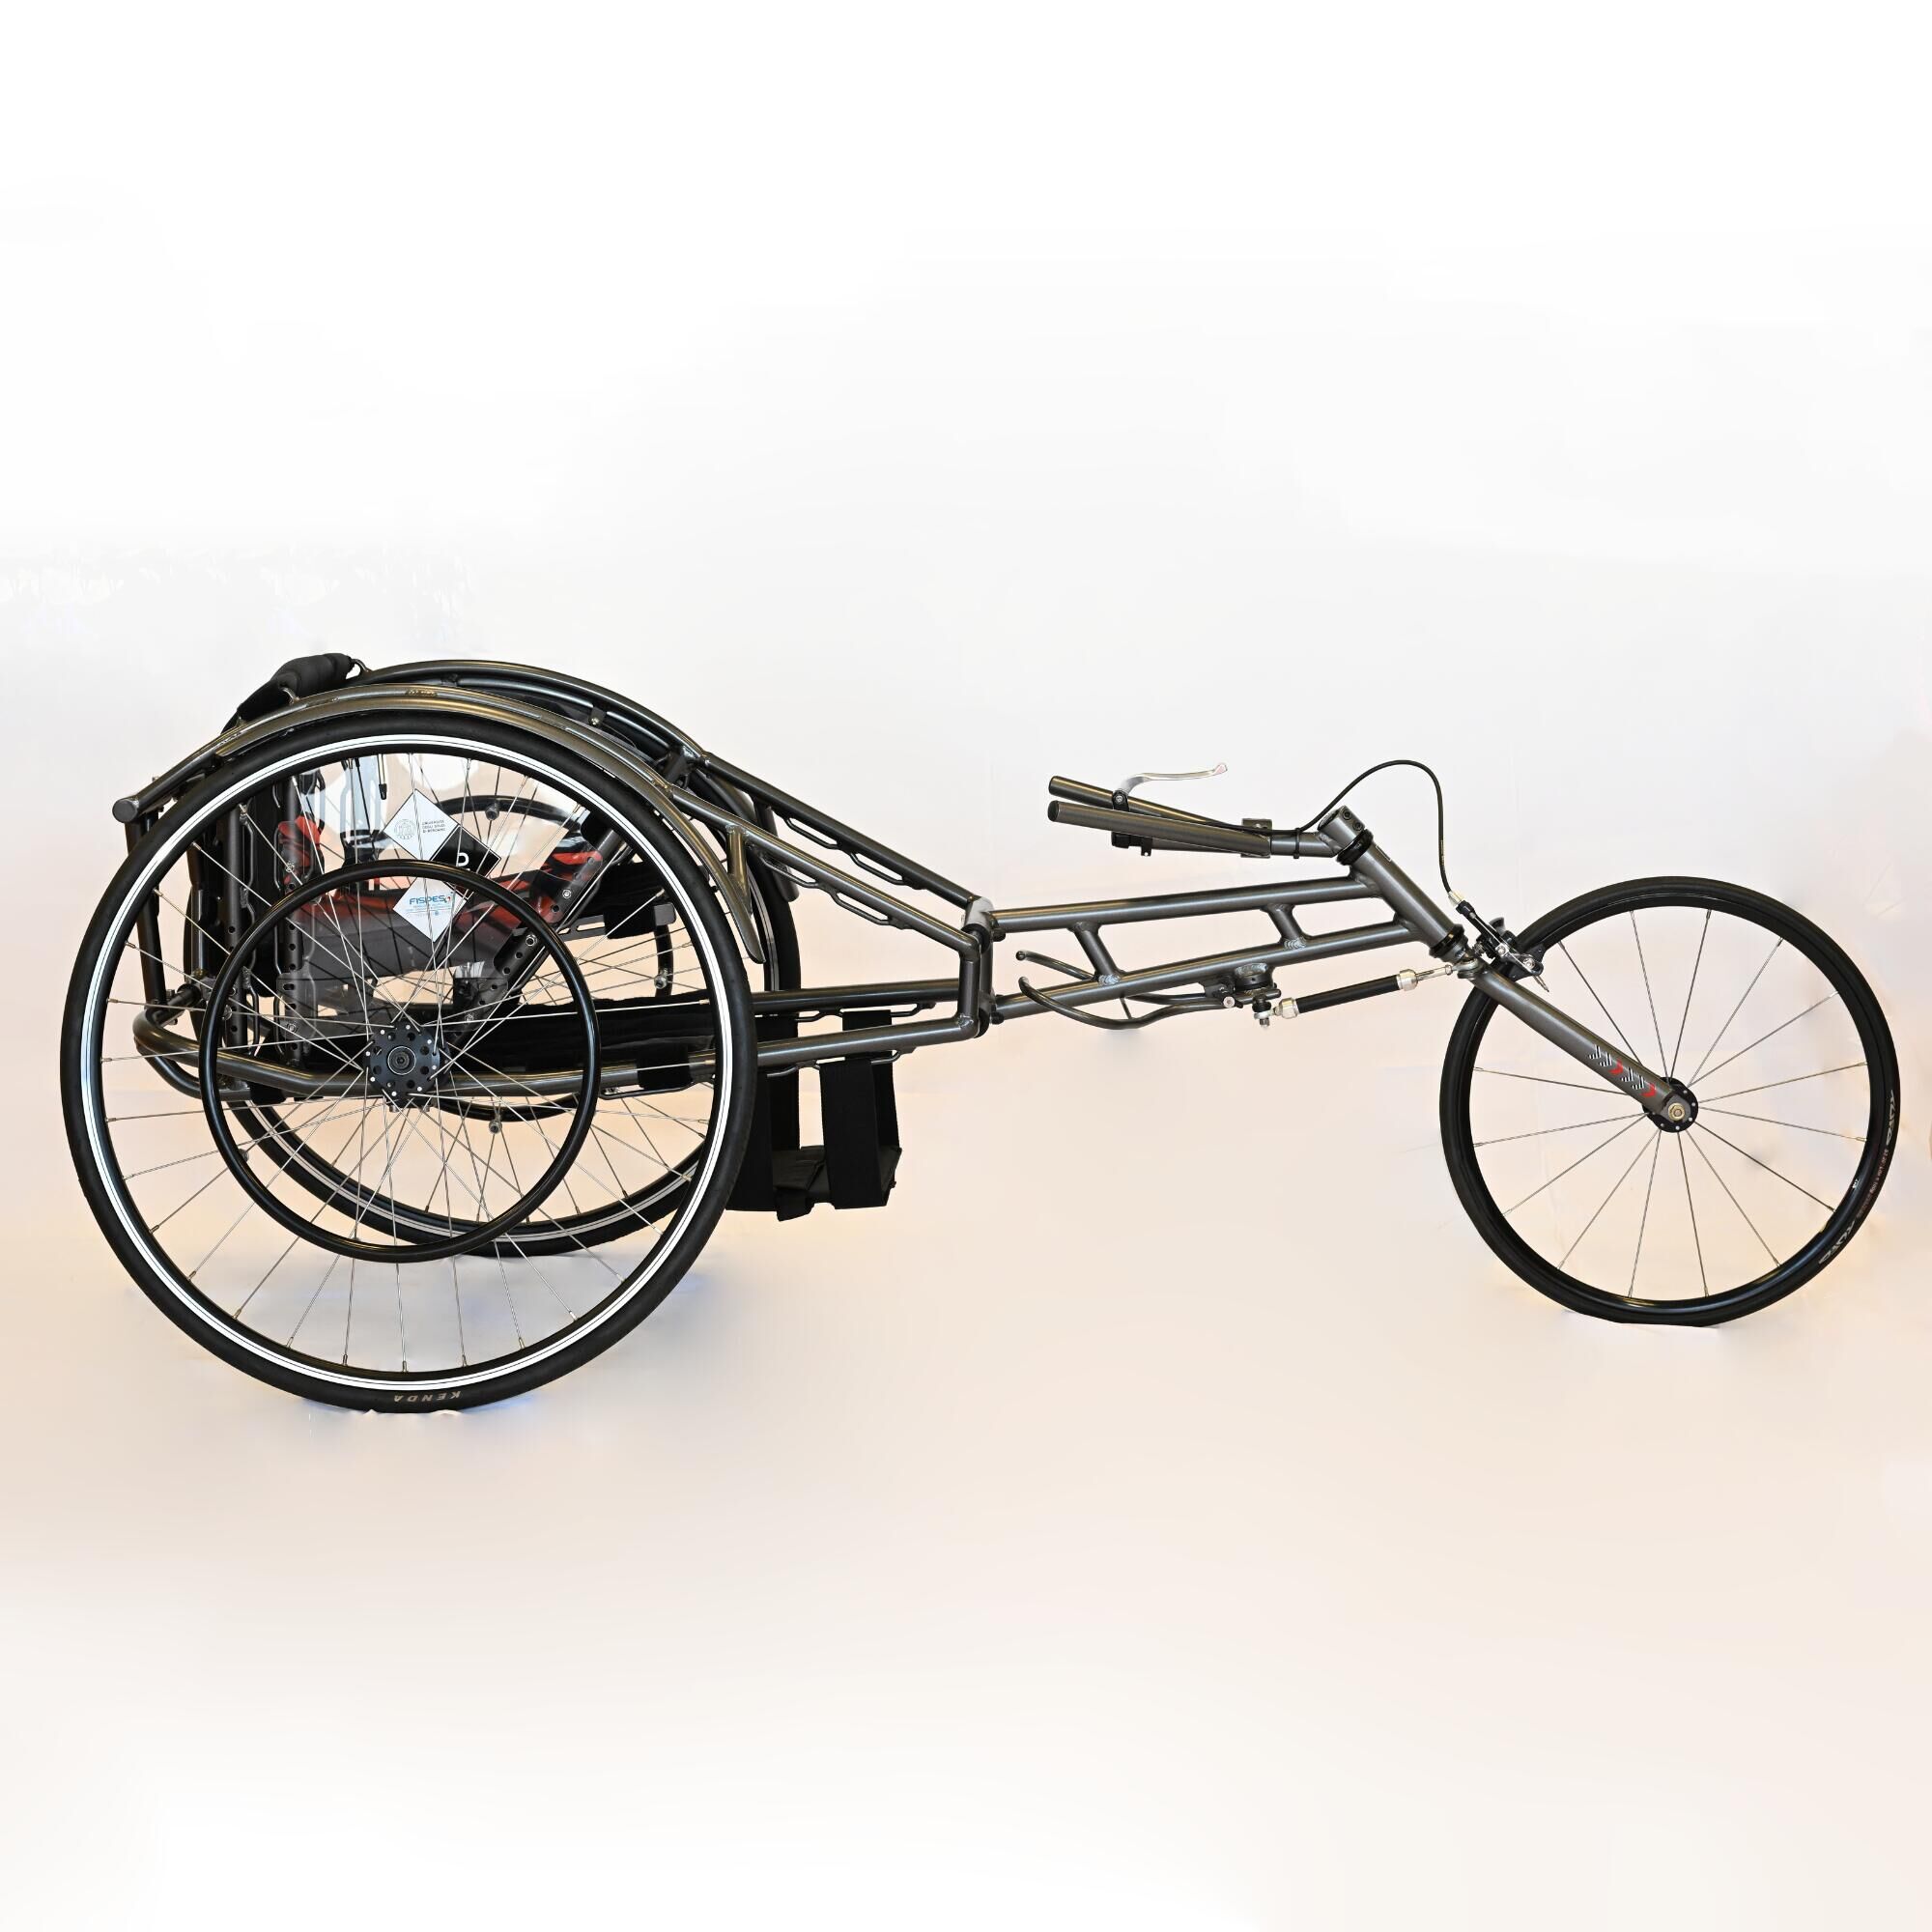 DECATHLON AW500 adjustable athletics wheelchair